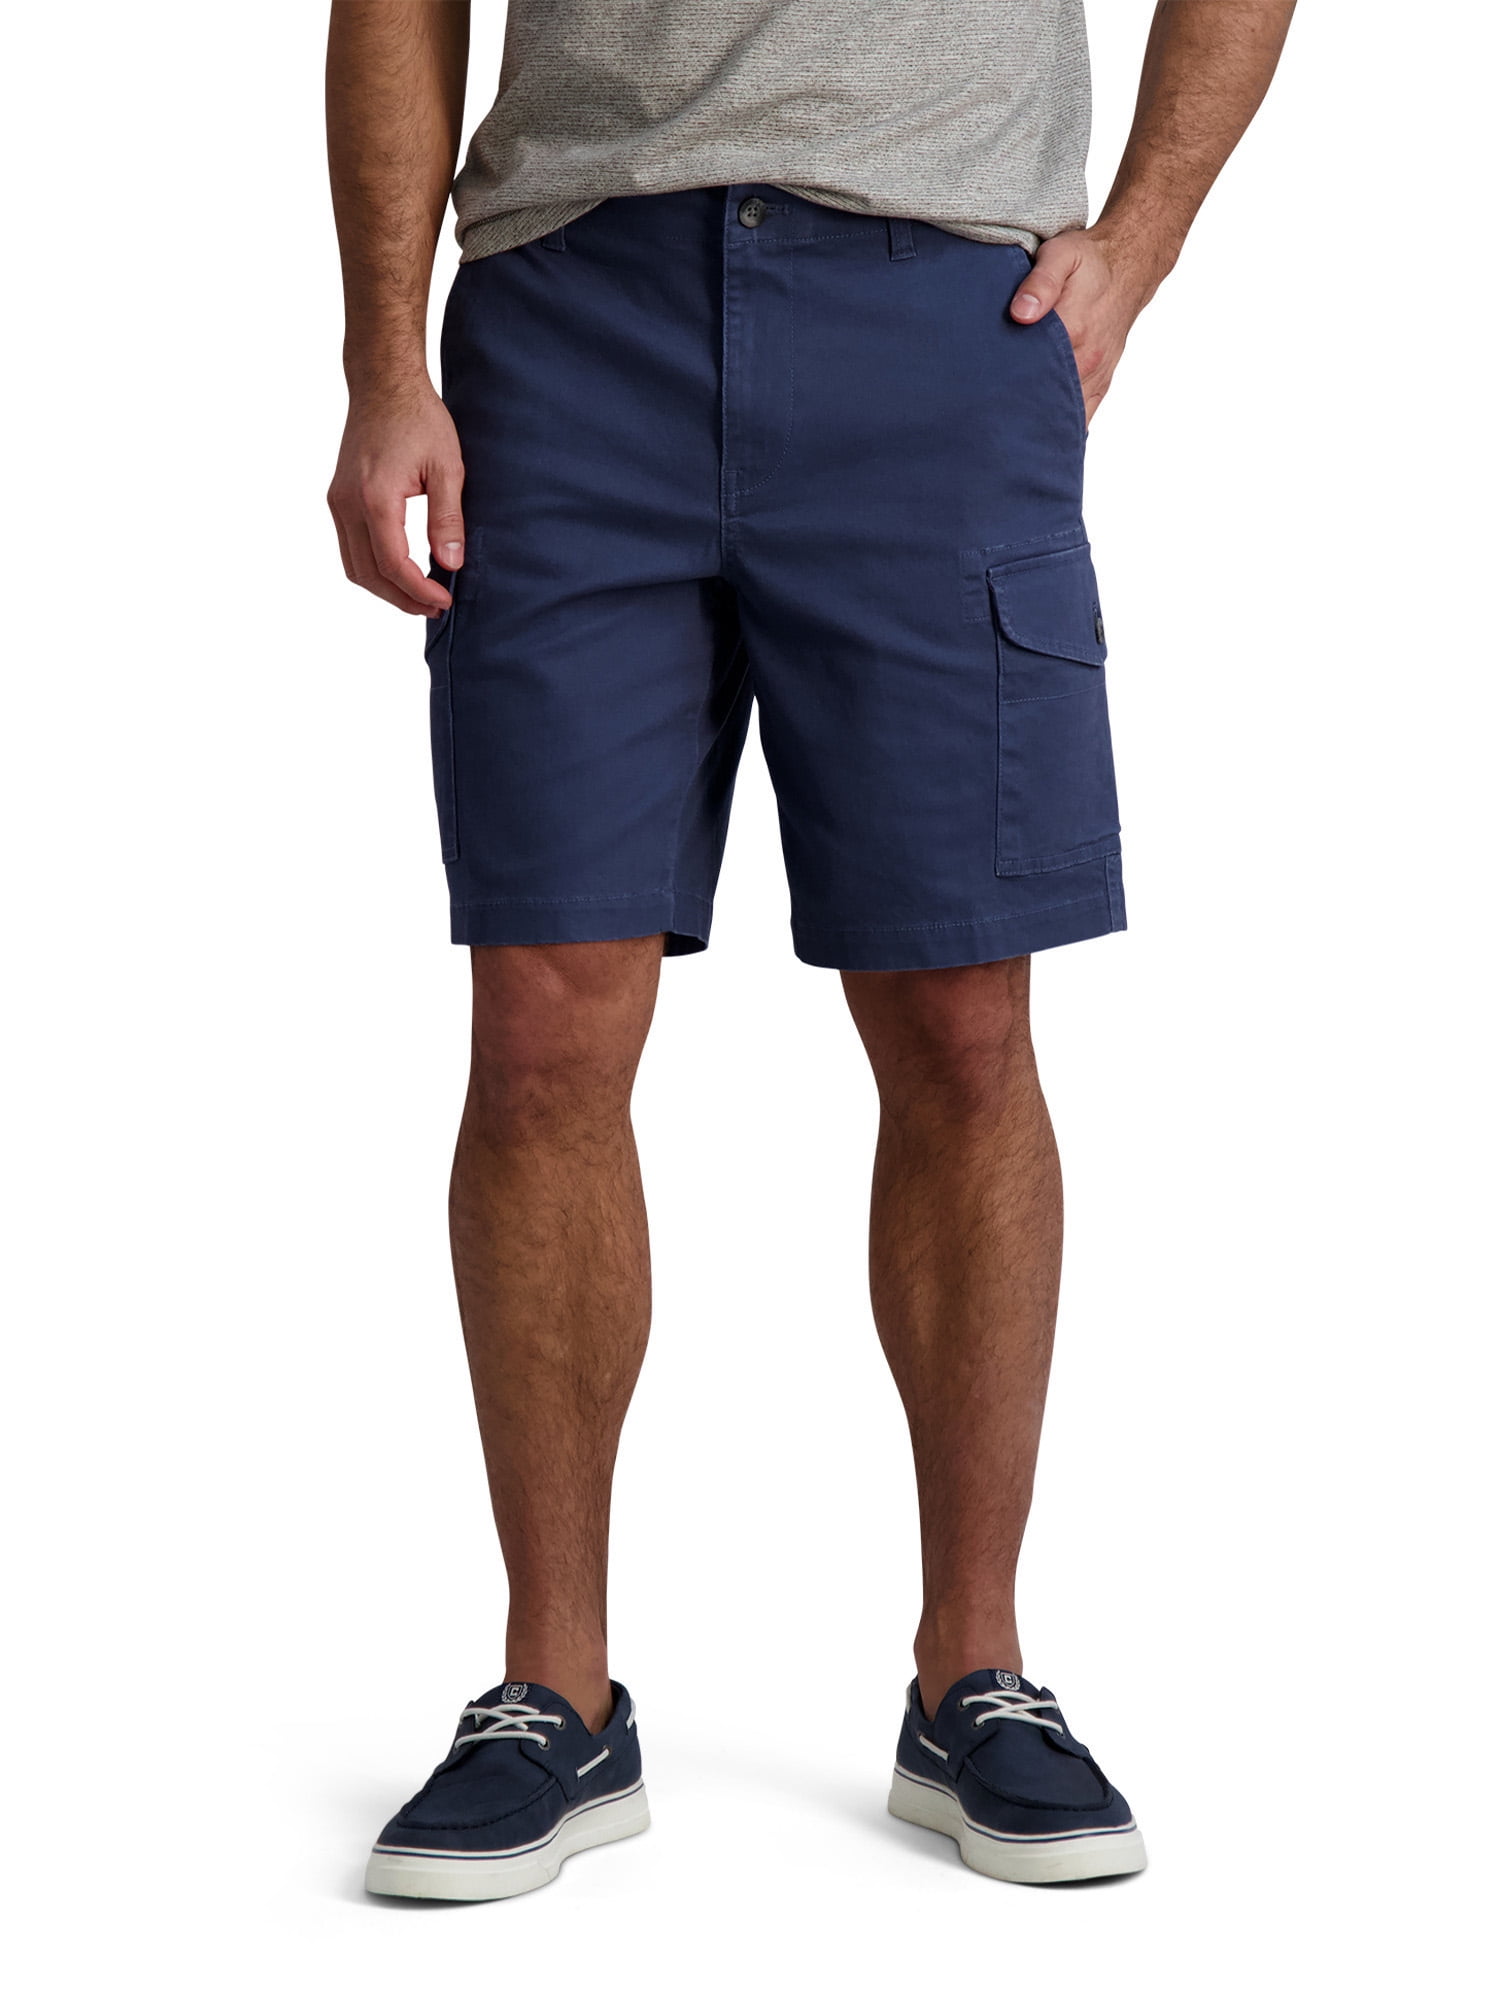 Chaps Bedford Cord Stretch Cargo Shorts, Sizes 28-42 - Walmart.com